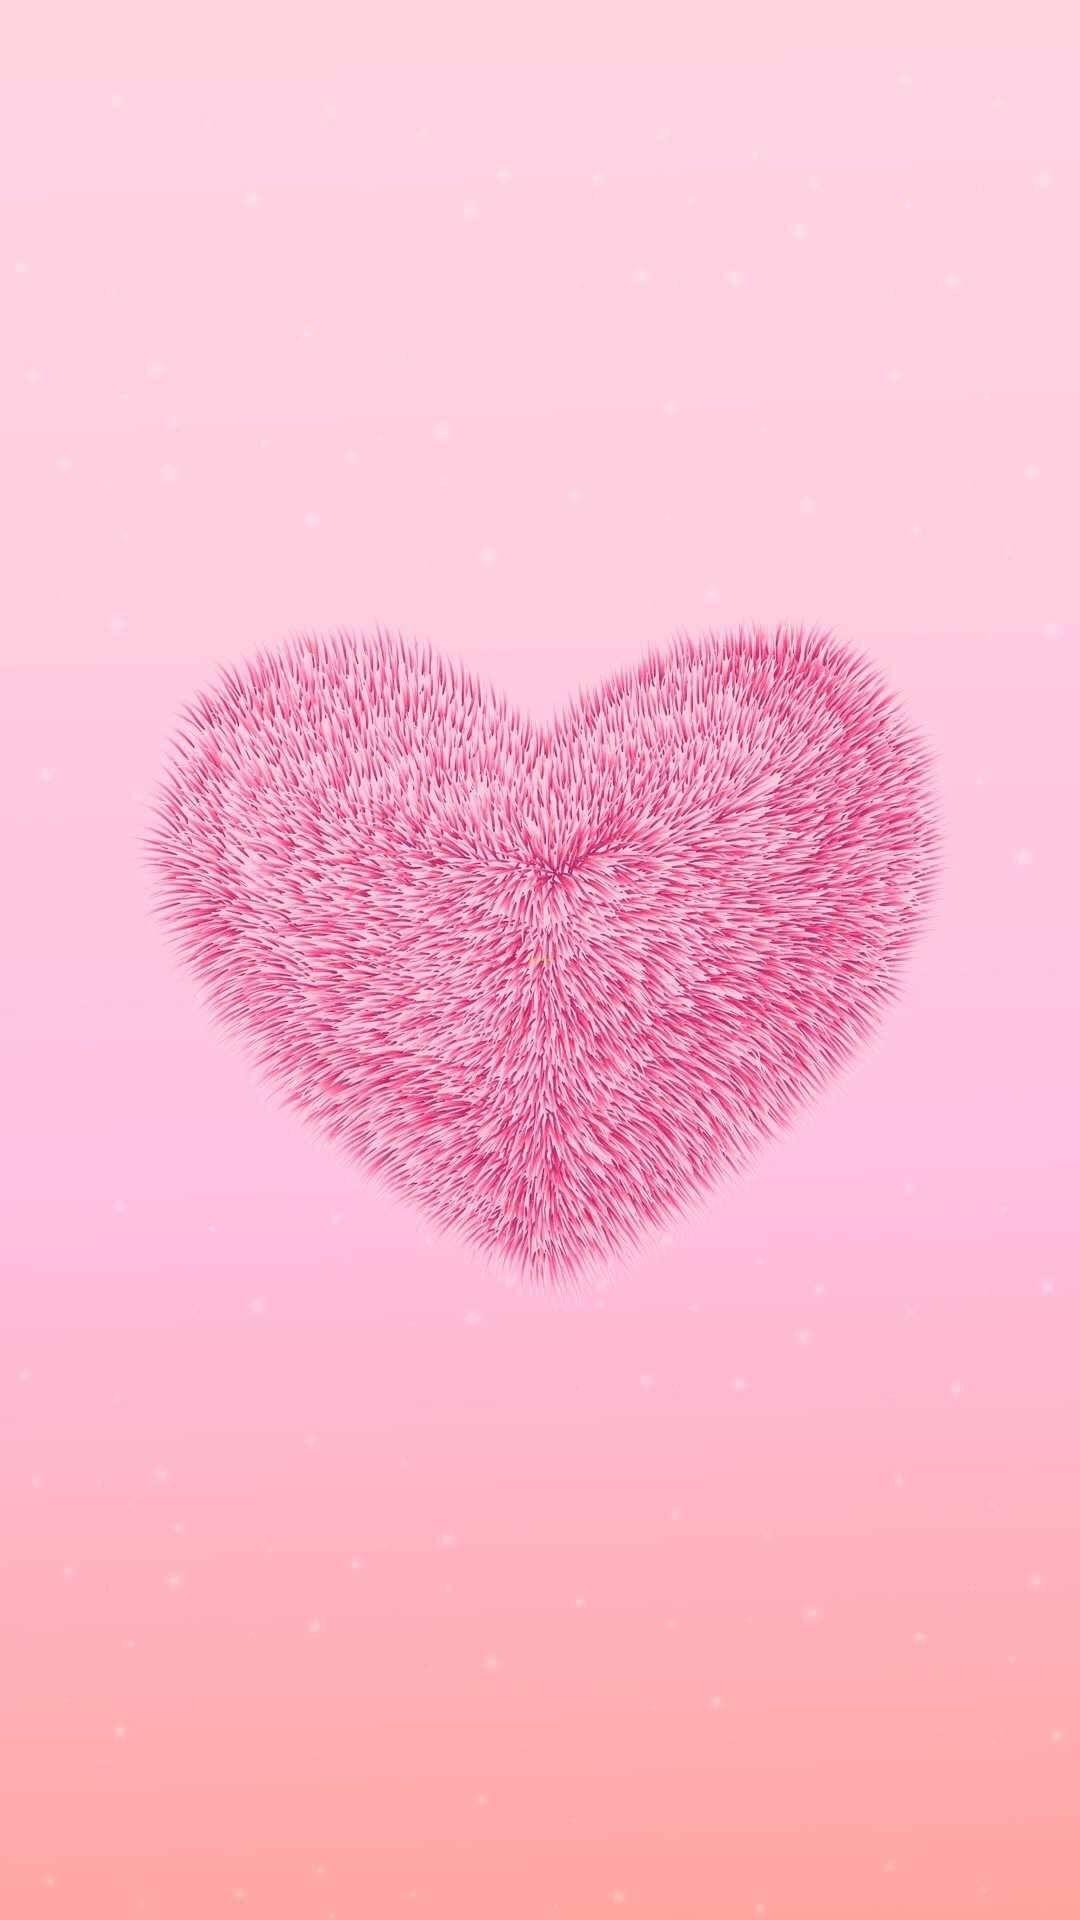 Cute Pink Heart Wallpapers  Top Free Cute Pink Heart Backgrounds   WallpaperAccess